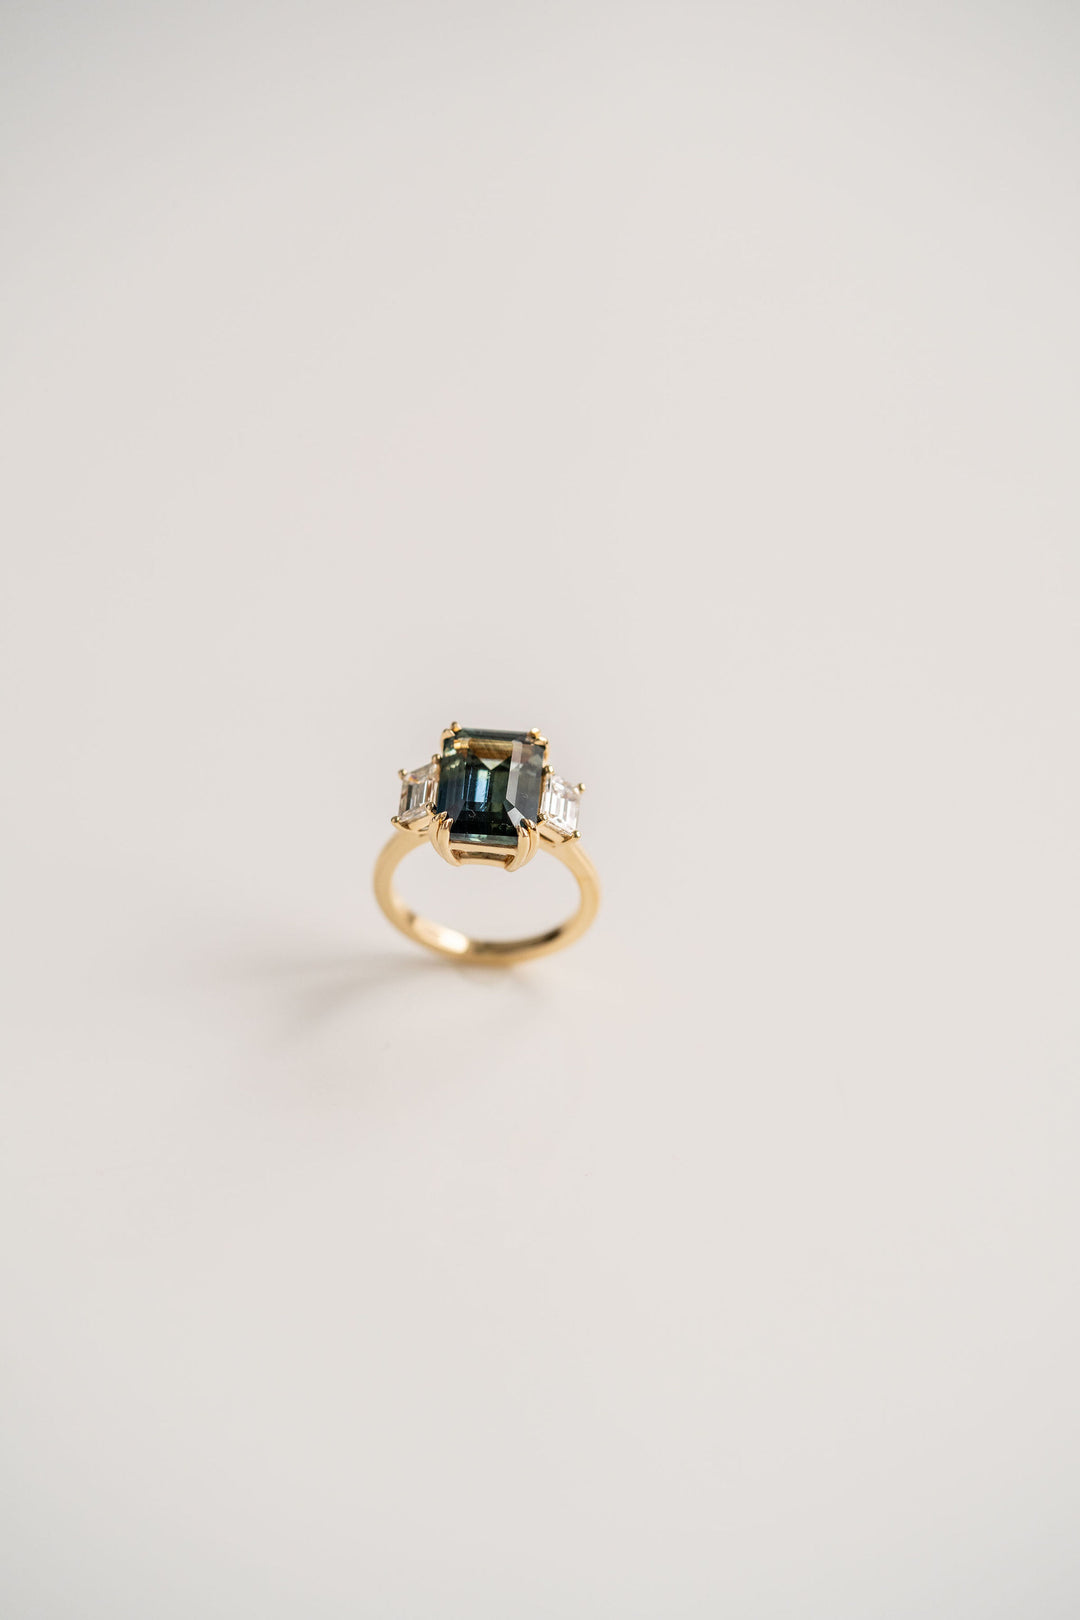 7.00ct. Emerald Cut Teal Sri Lankan Sapphire With Emerald Cut Diamond Accents, 14k Yellow Gold